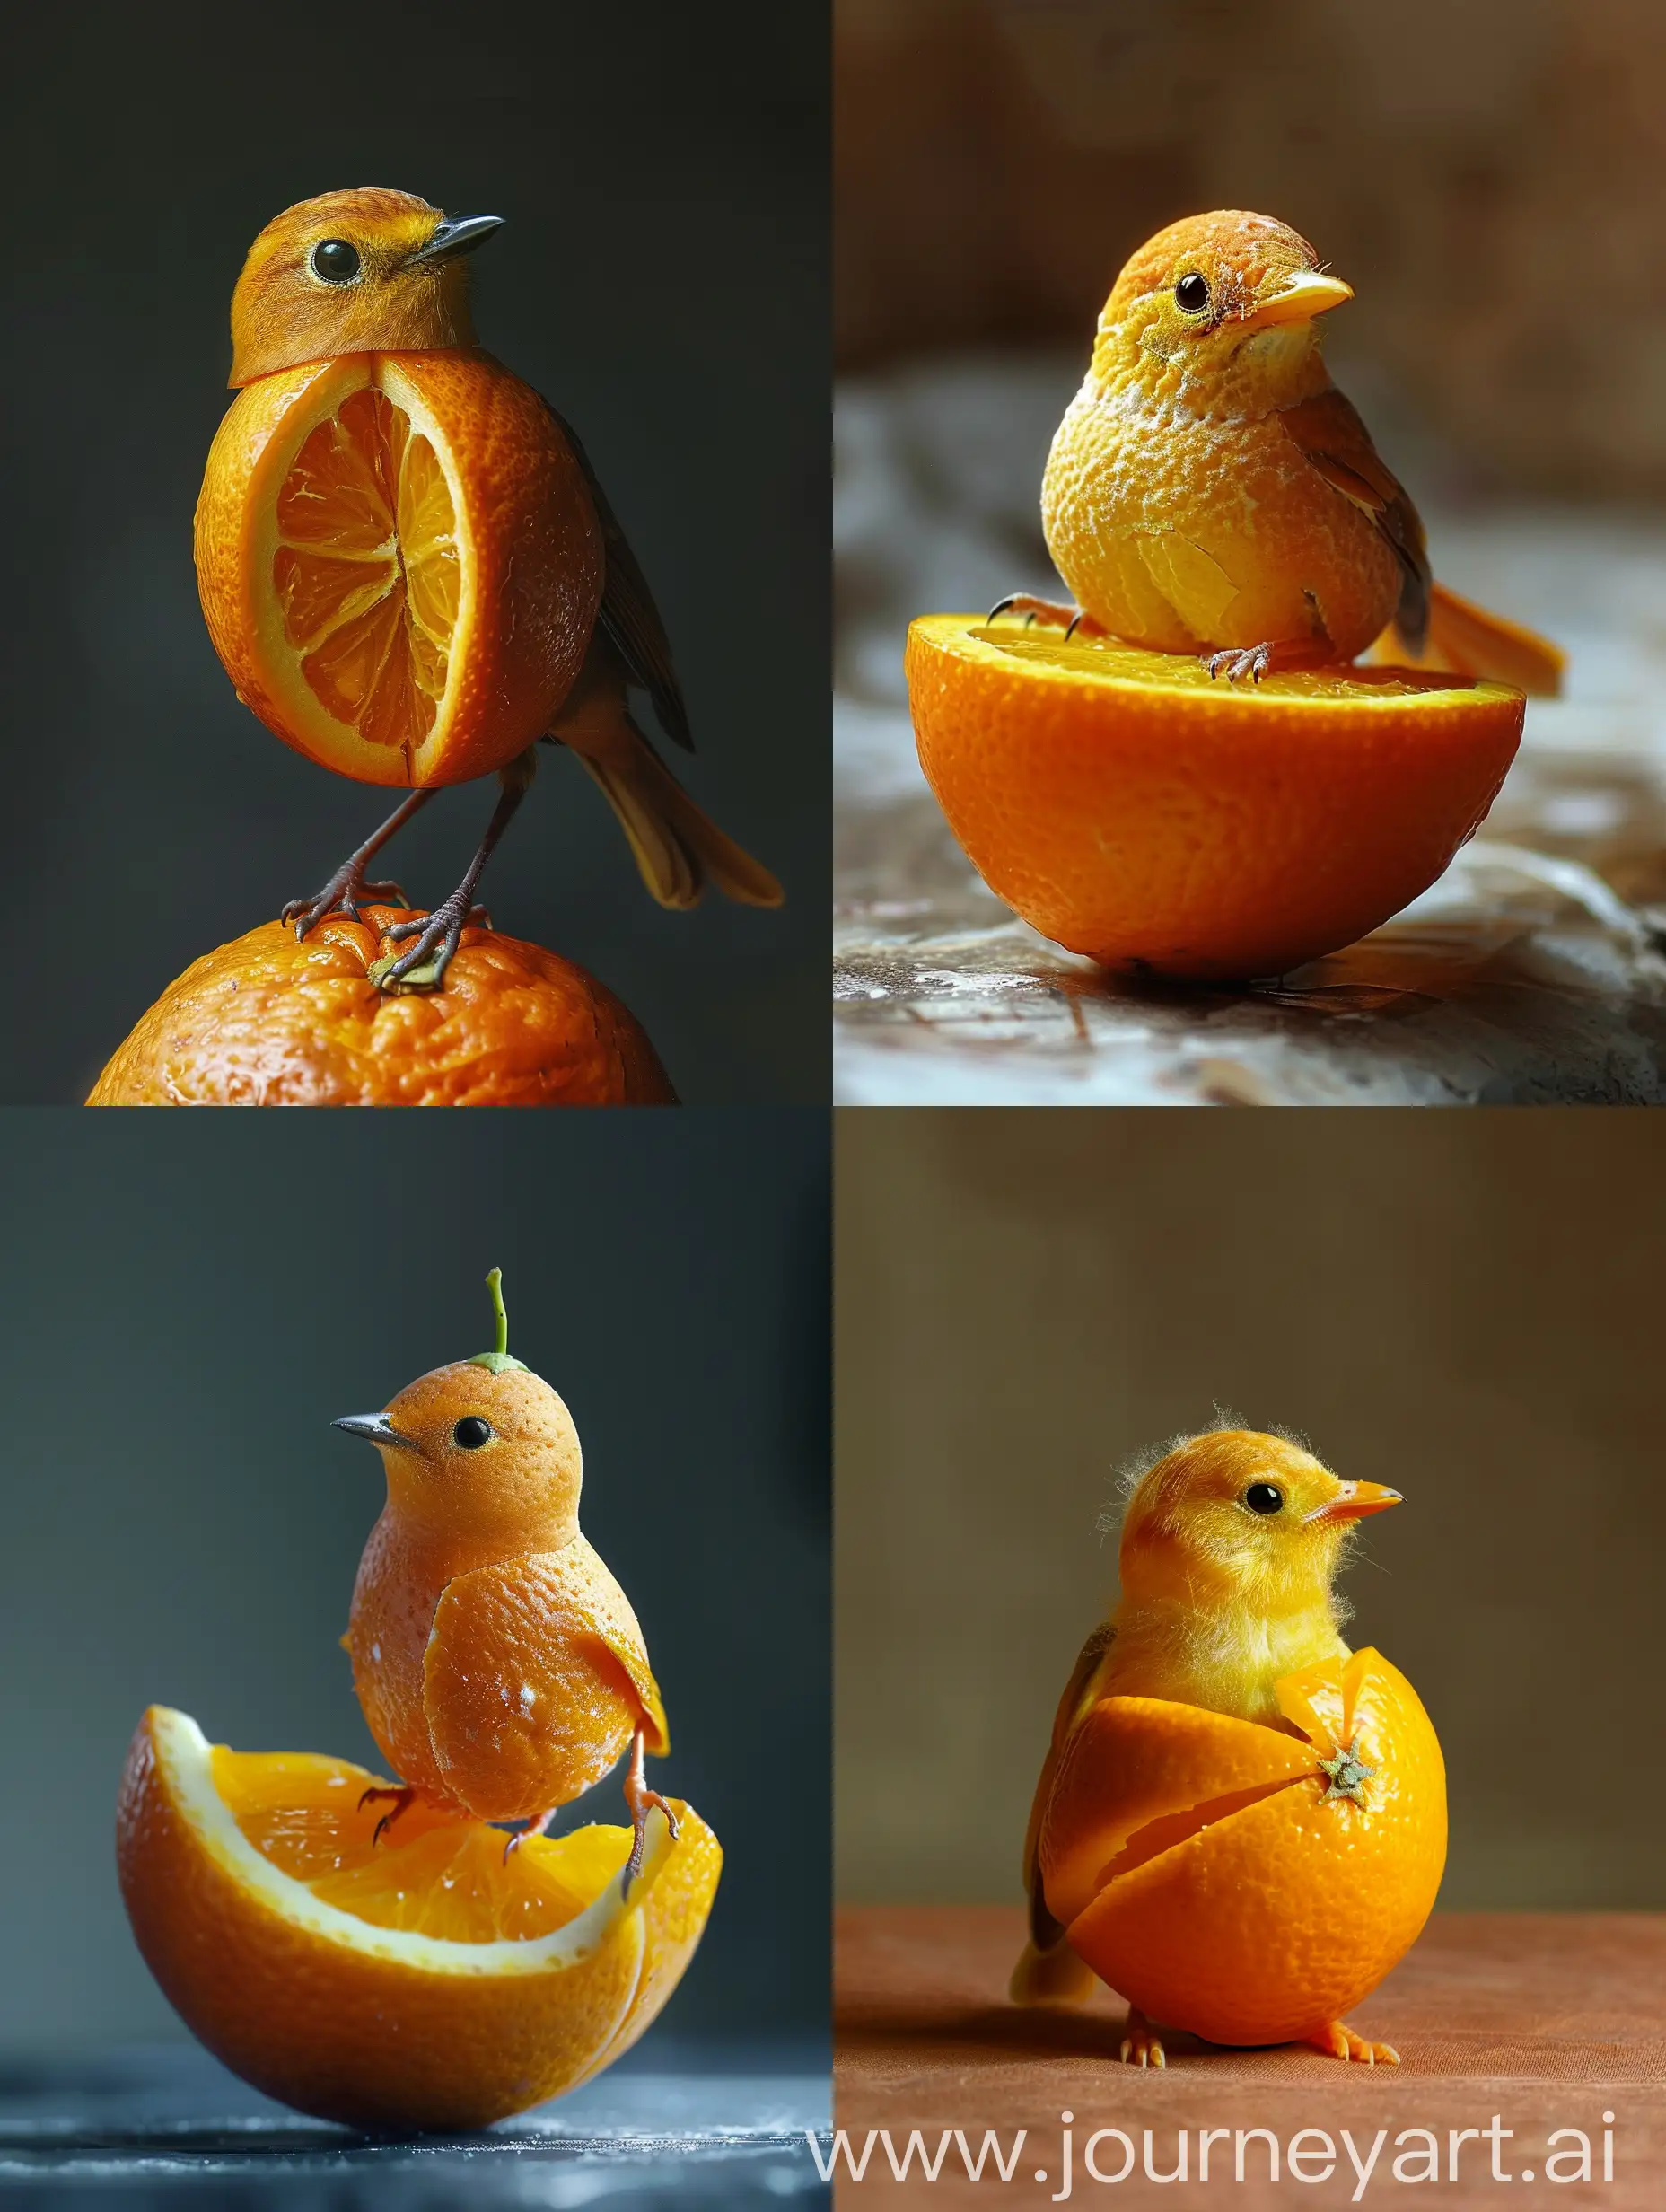 Fresh-Orange-Bird-Sculpture-in-PhotoRealistic-Style